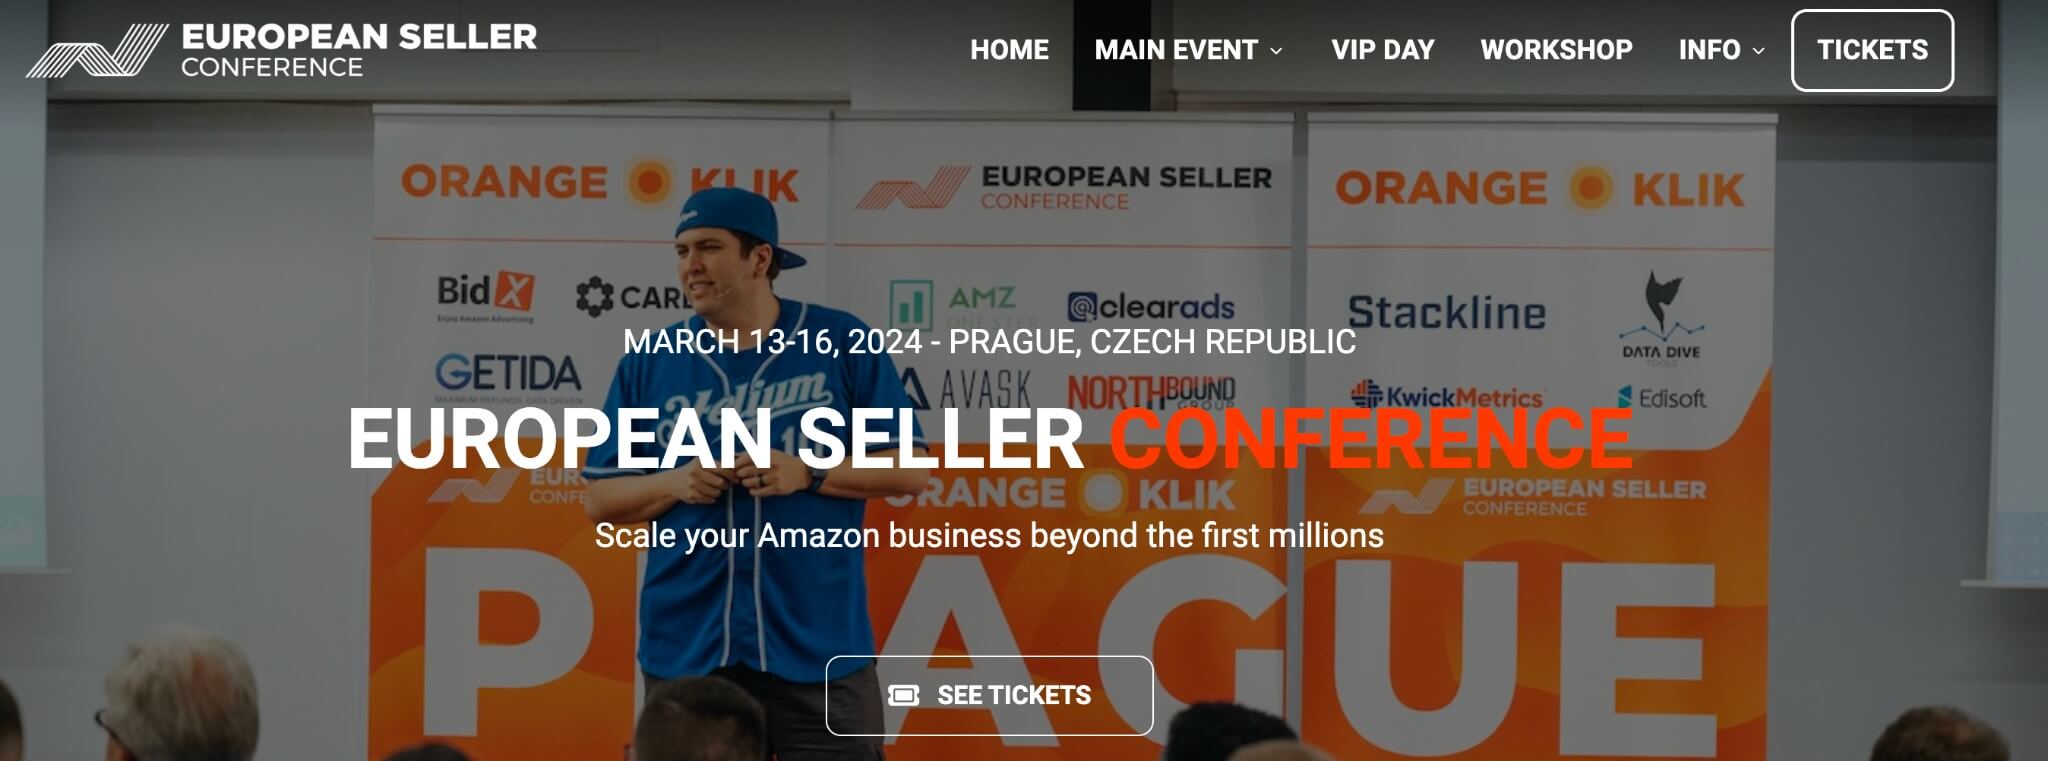 european-seller-conference-image